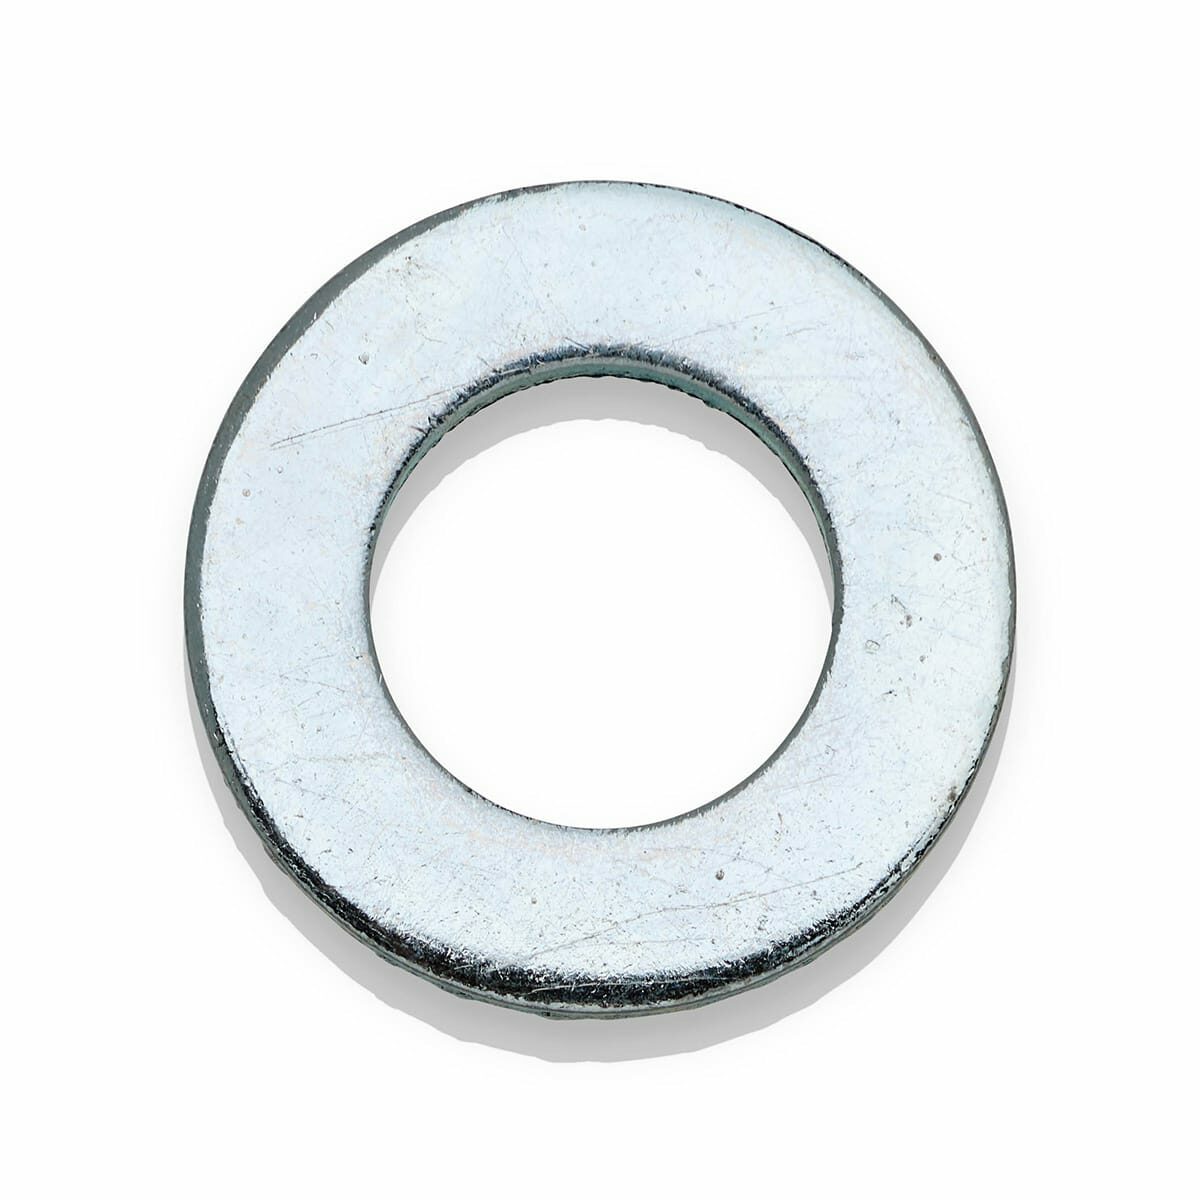 M10 Zinc-Plated Metric Flat Washer (5-Piece)